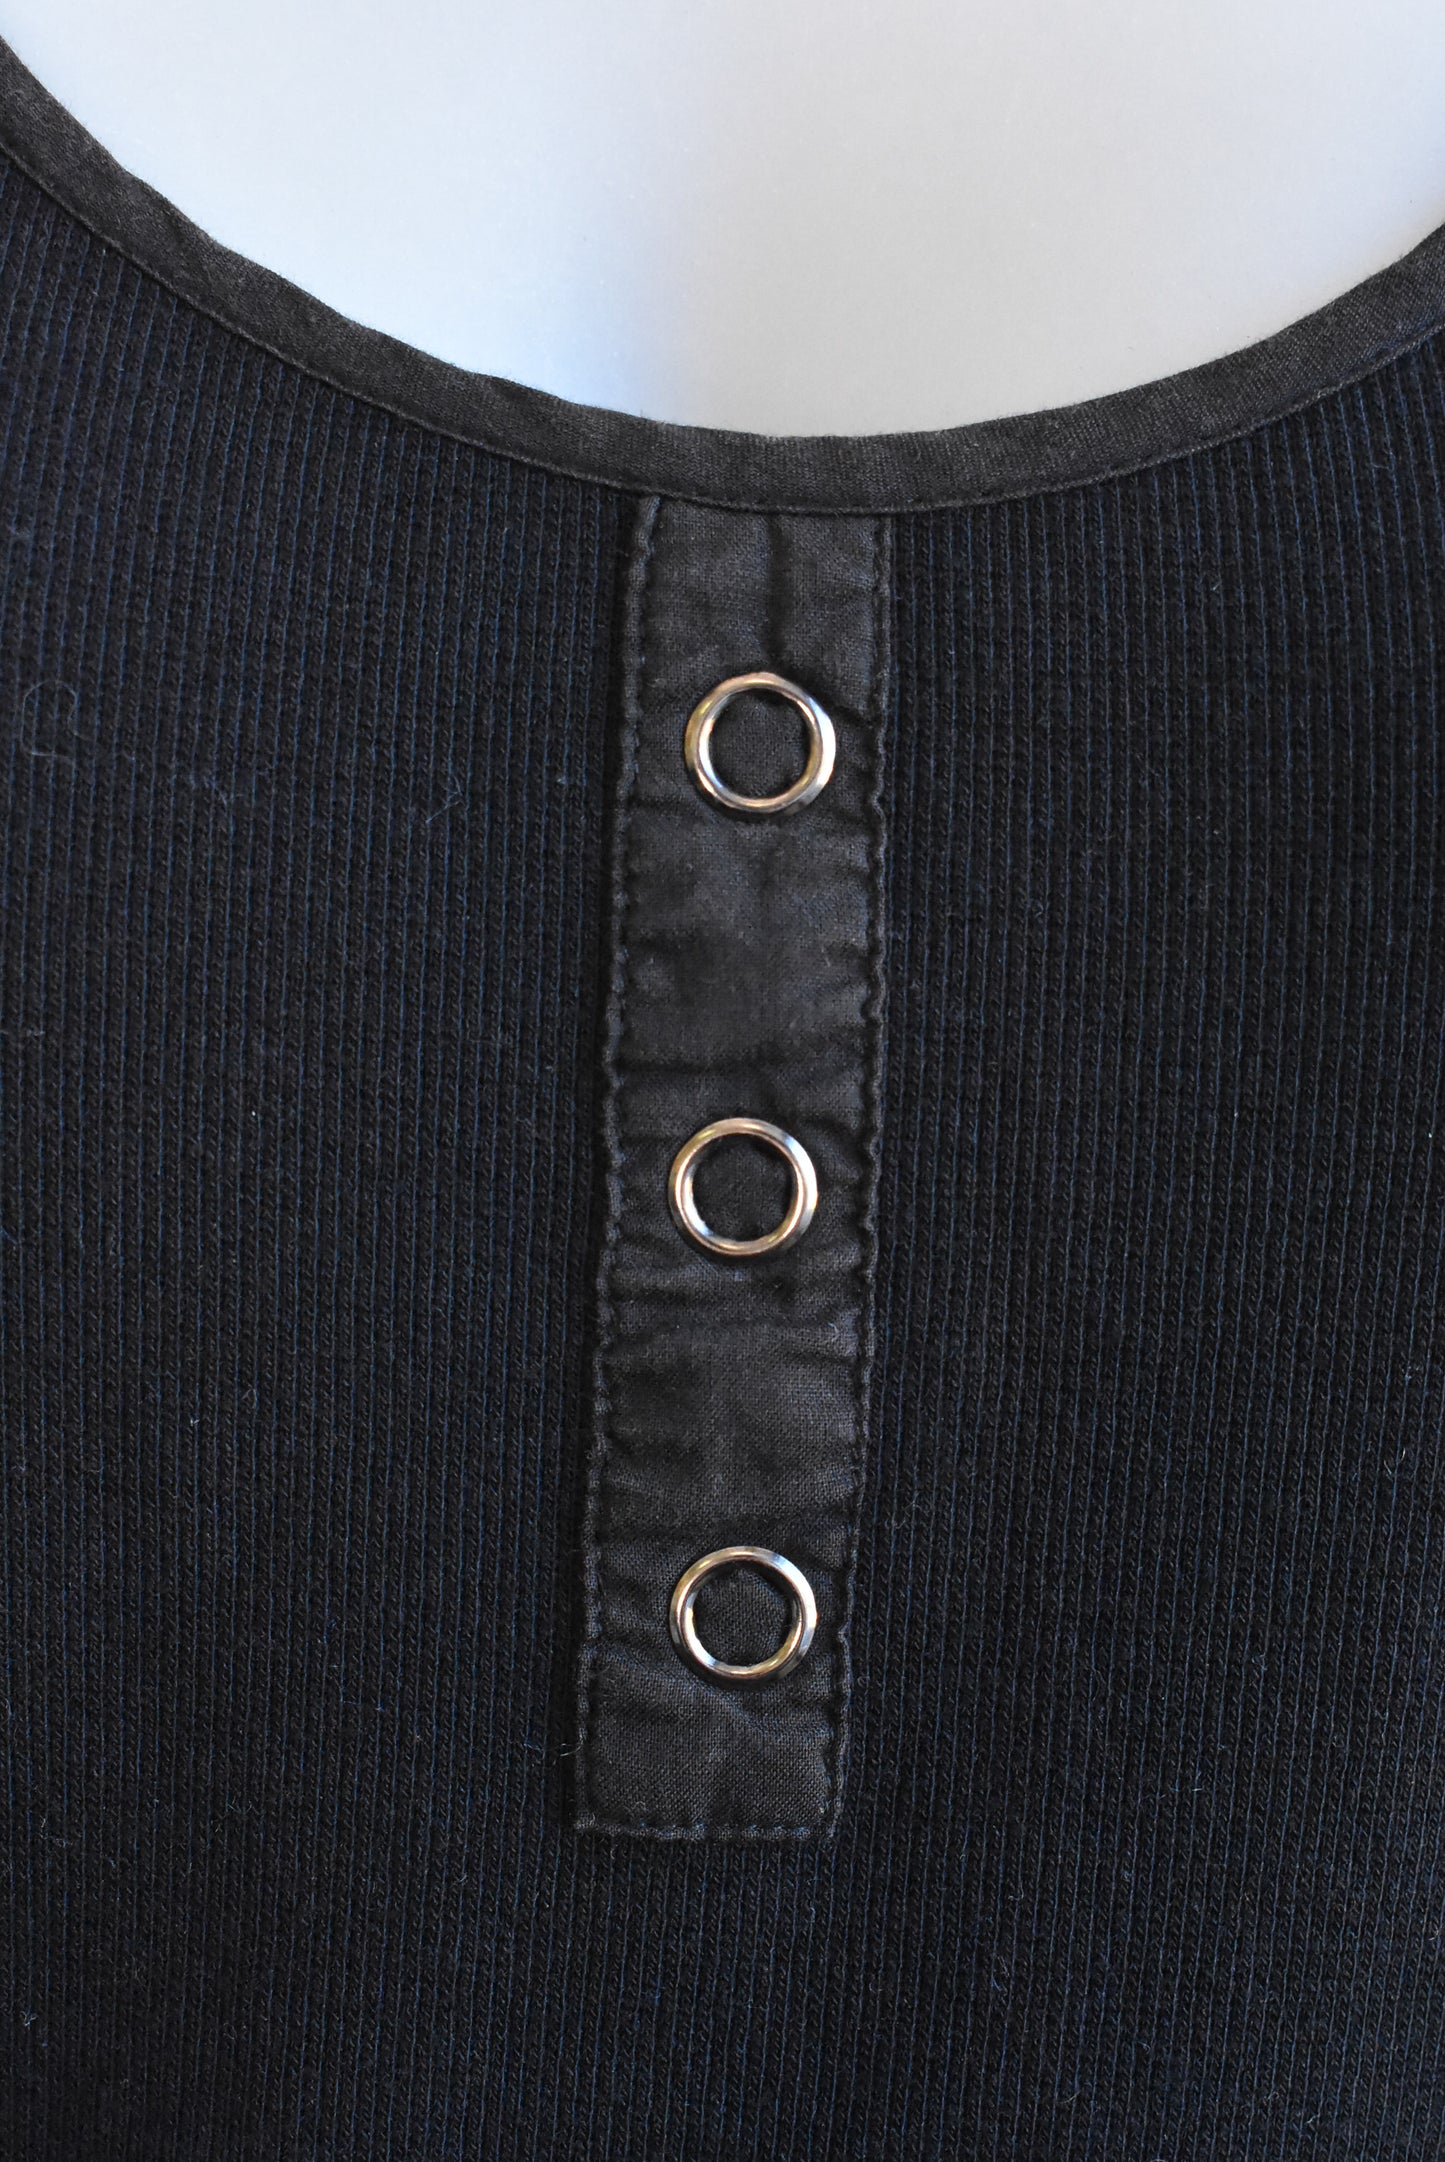 Jacqui-e sleeveless black dress with front pockets, size 12